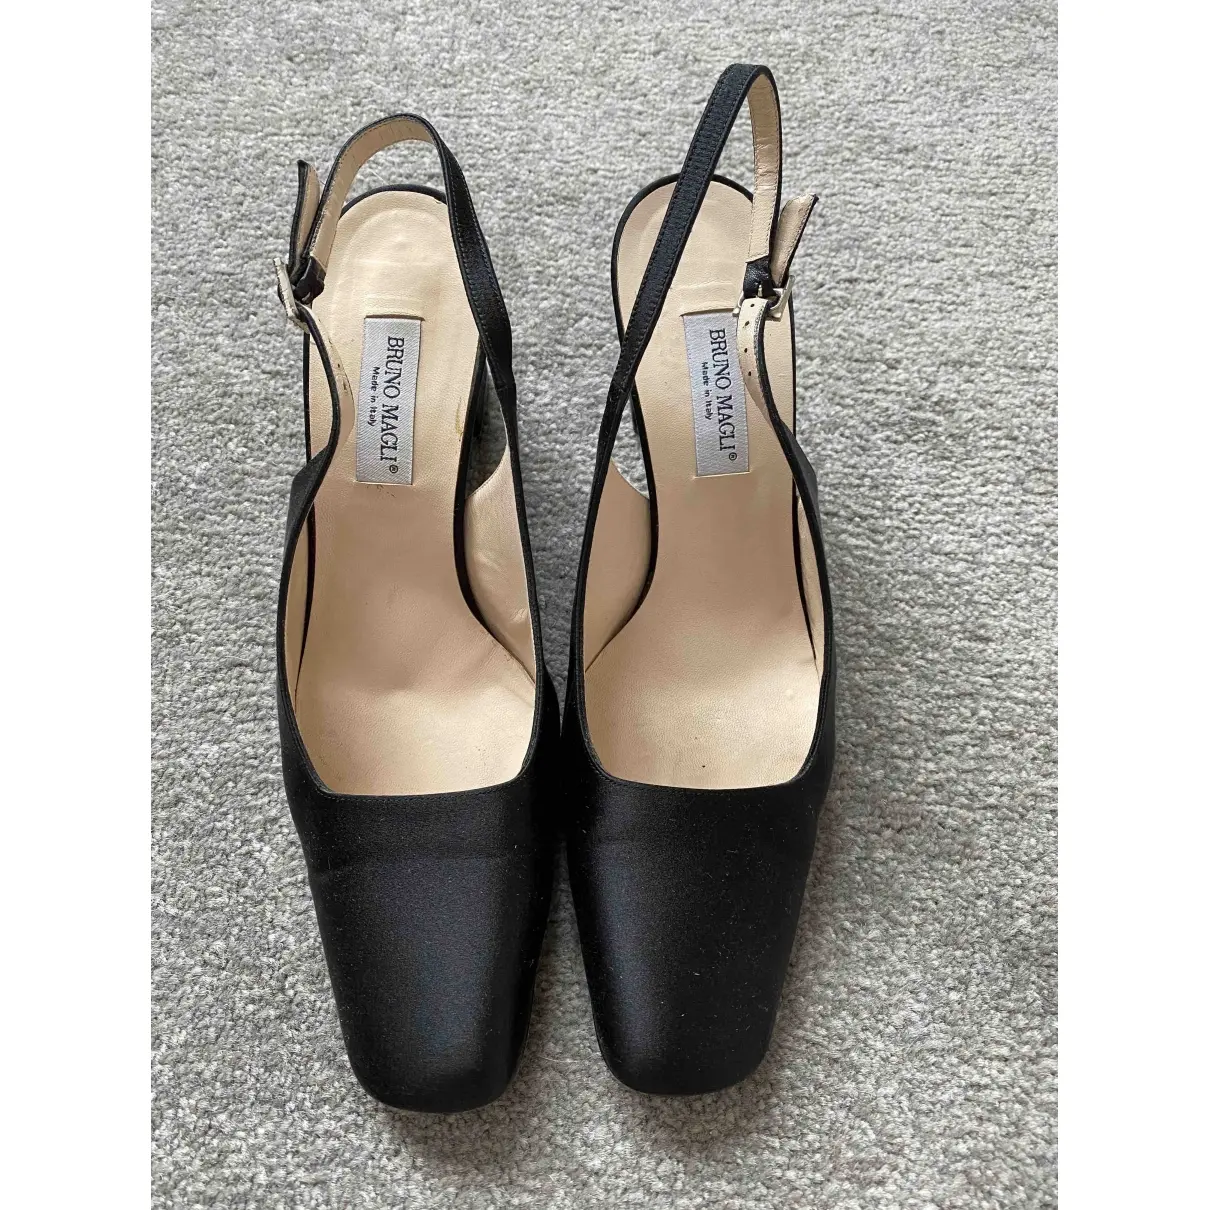 Buy Bruno Magli Cloth heels online